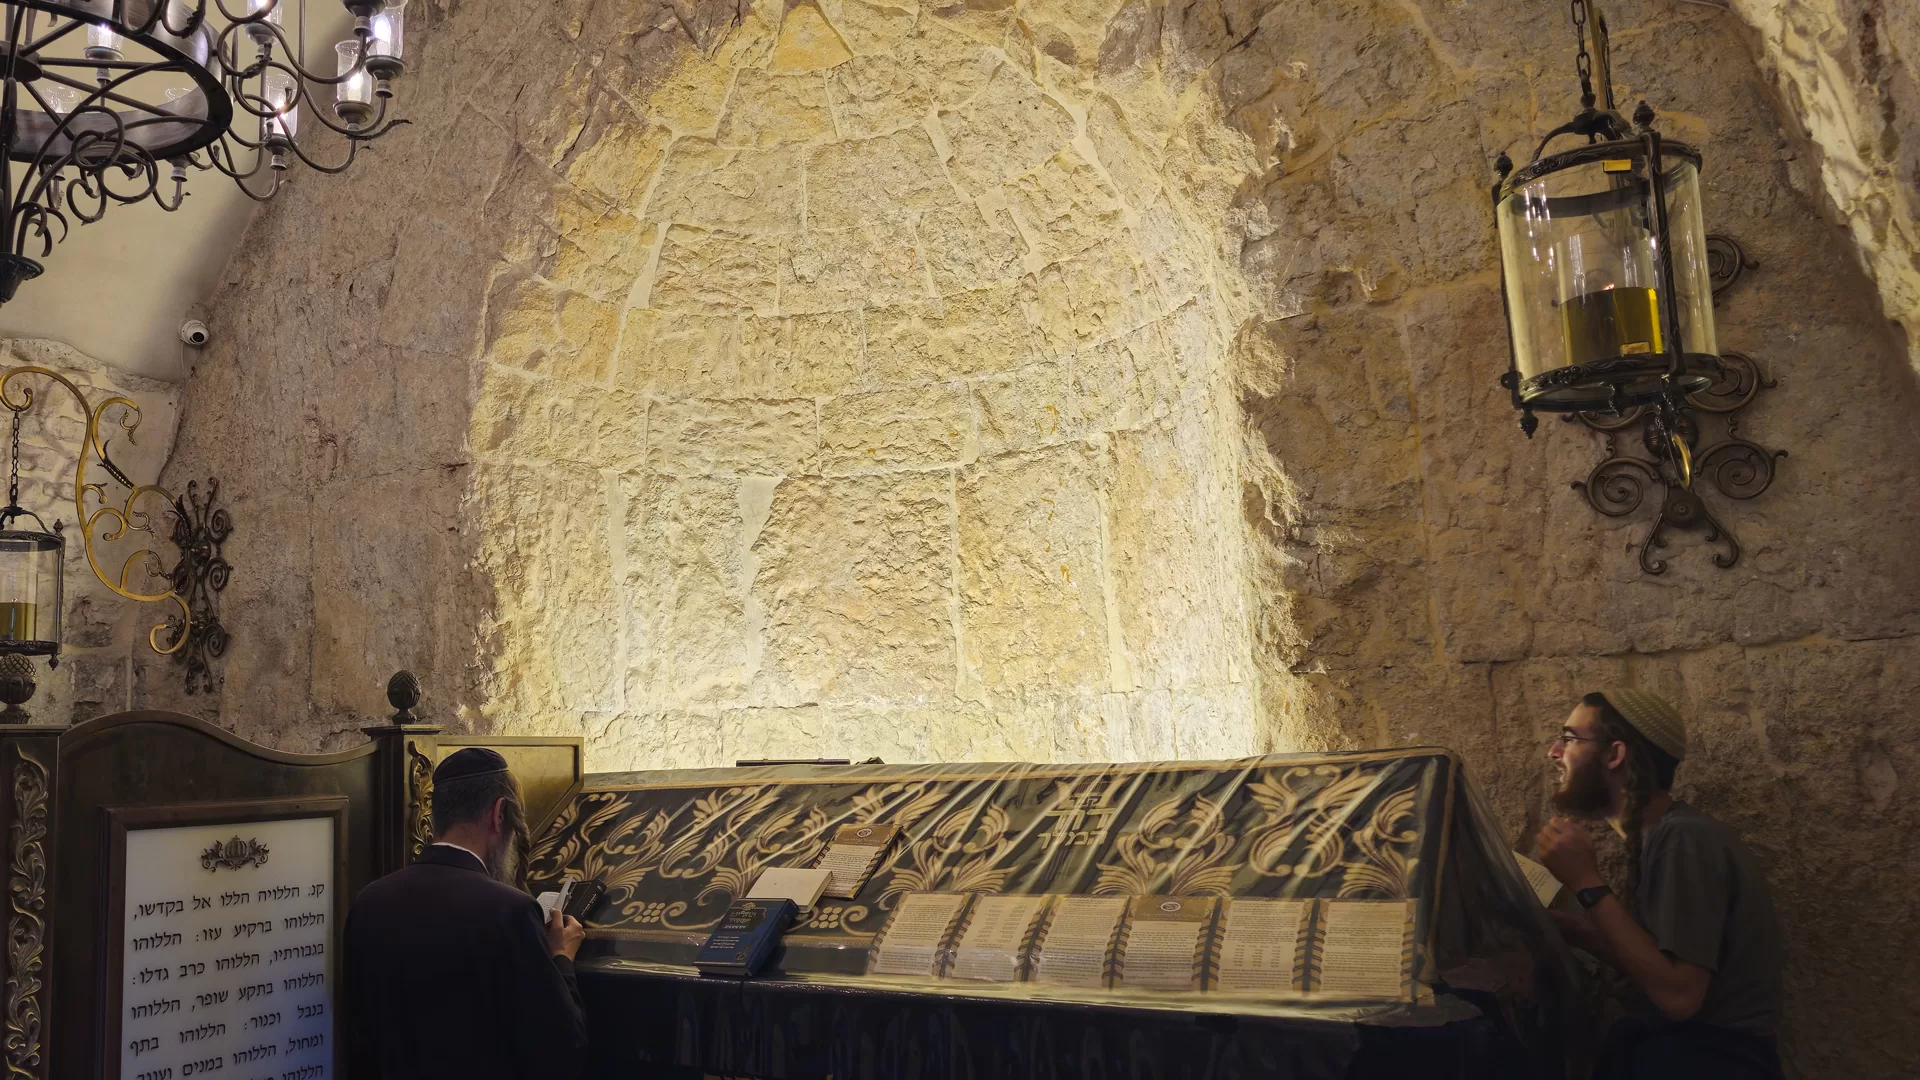 Inside the Tomb of King David (Kever David HaMelech)